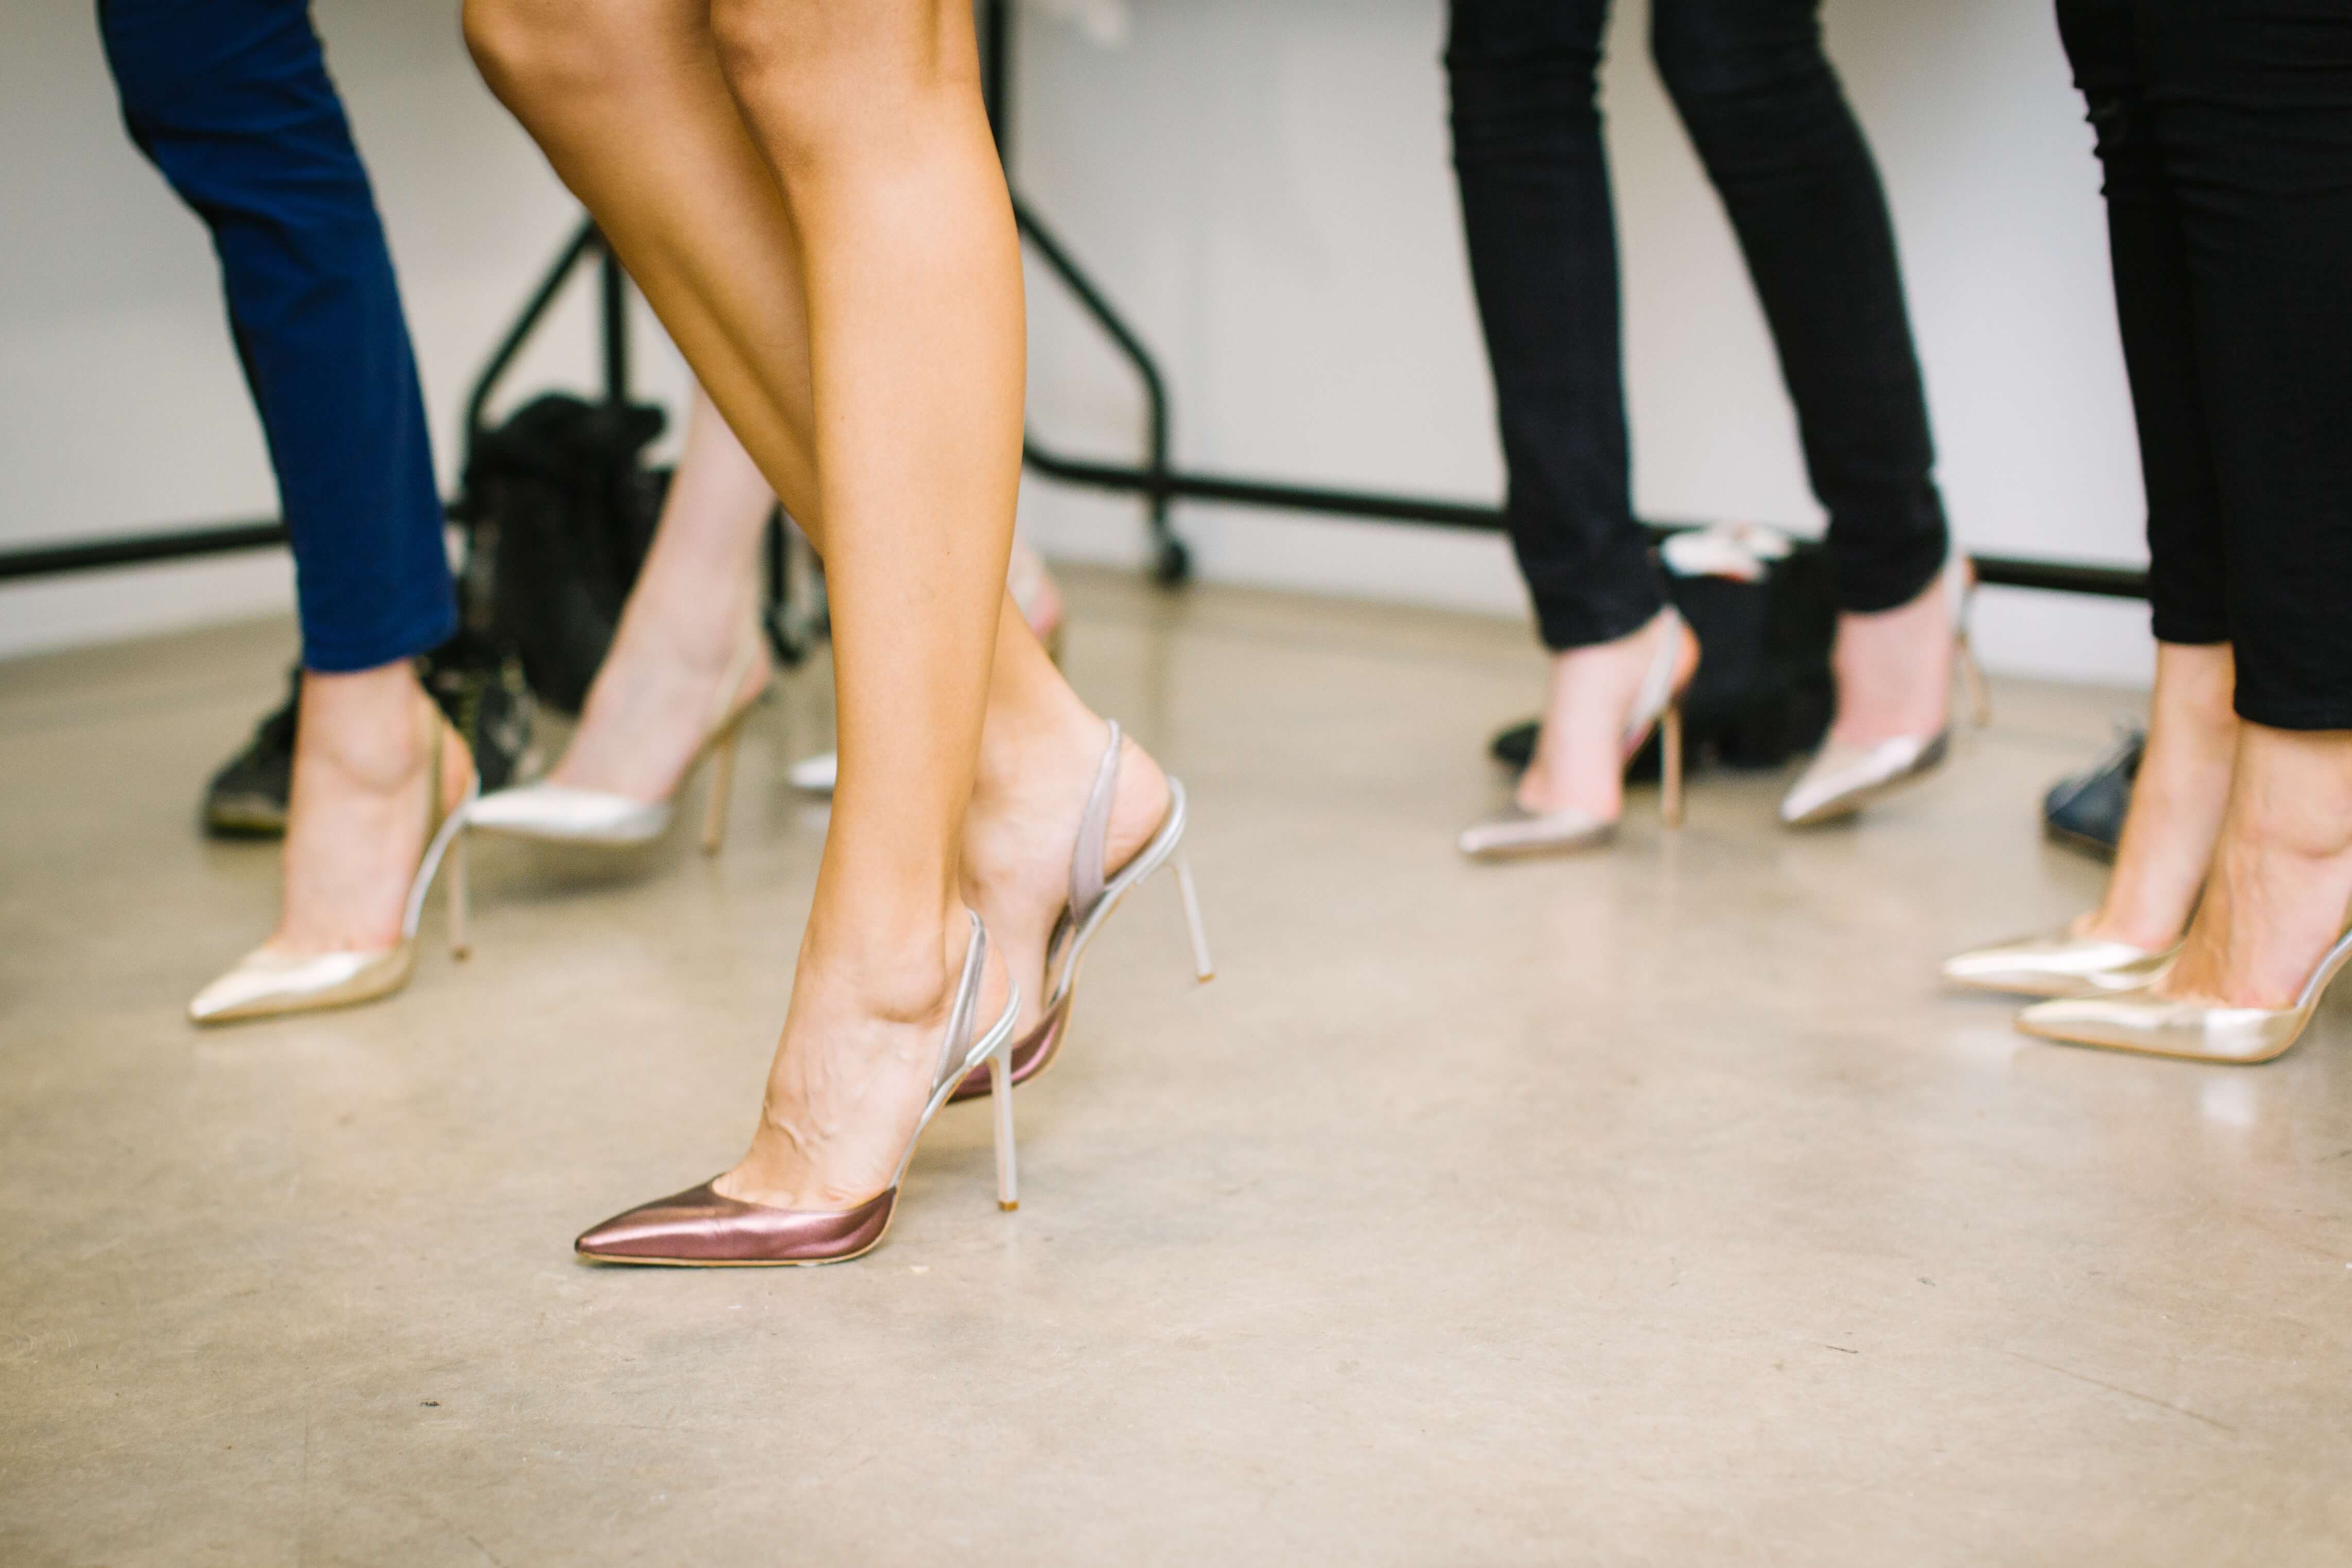 picture of ladies feet in high heels